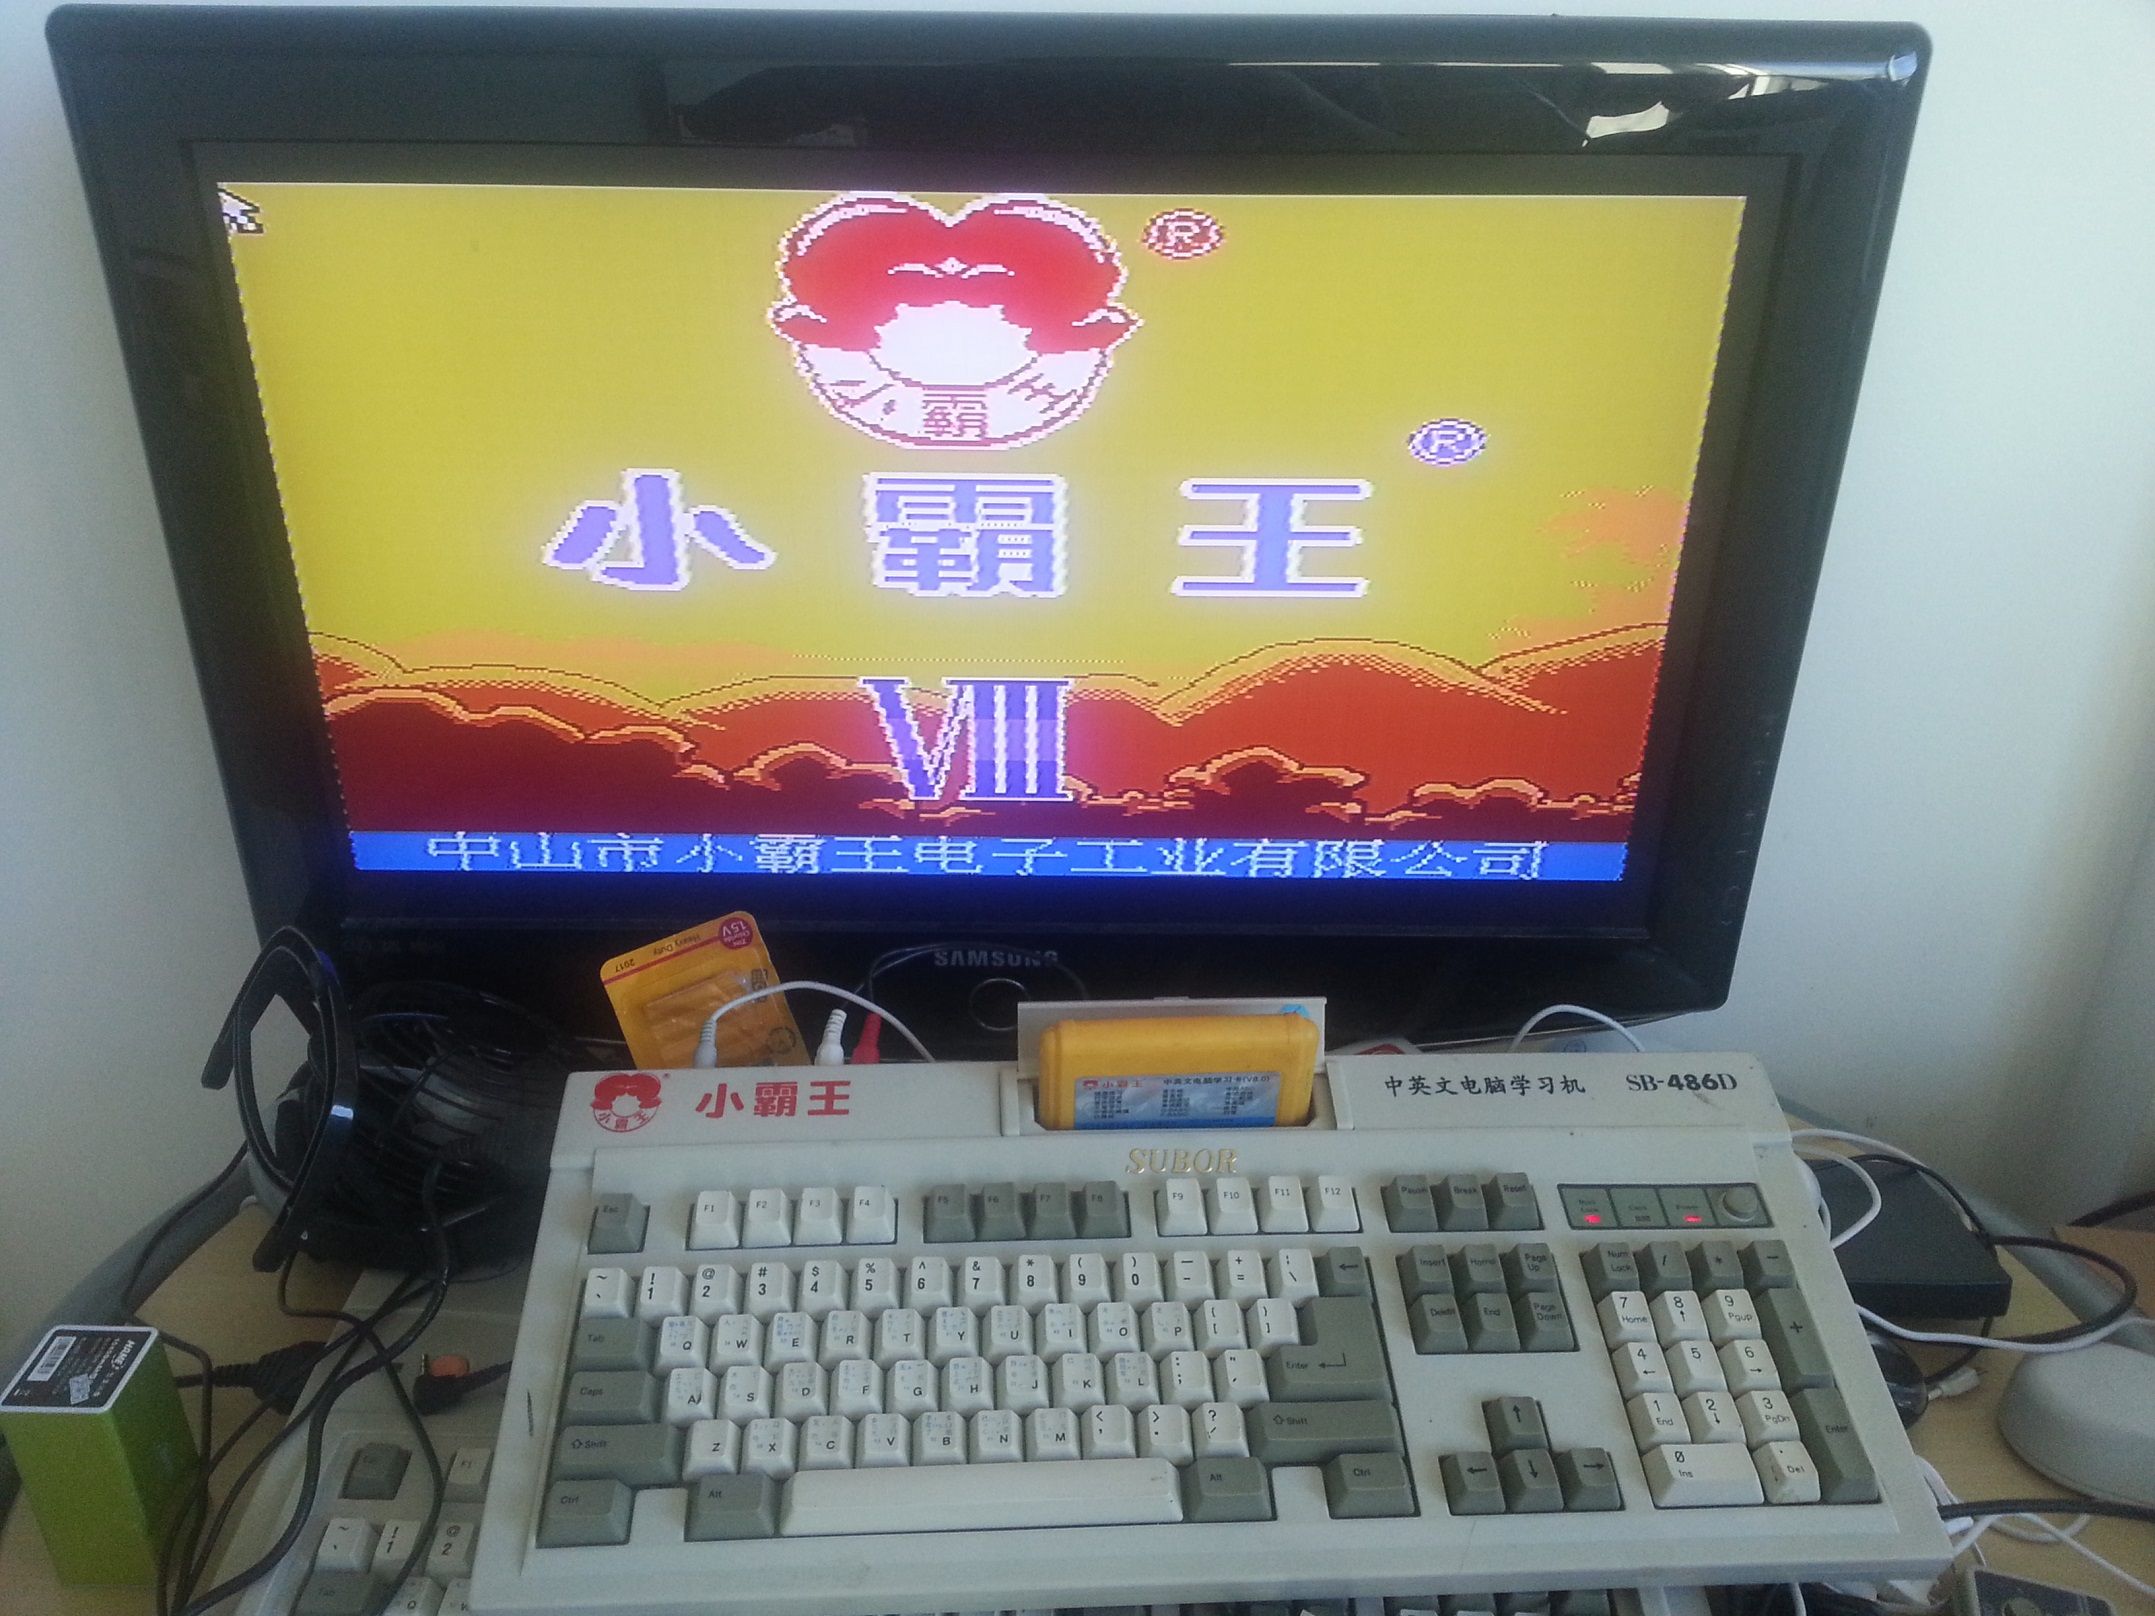 12399b0a39fa3c0ef3adb405601aeccd The Childhood Memory - Subor Famicom Clone SB-486D (Xiao Ba Wang) 8 bit Nintendo Entertainment System Subor 